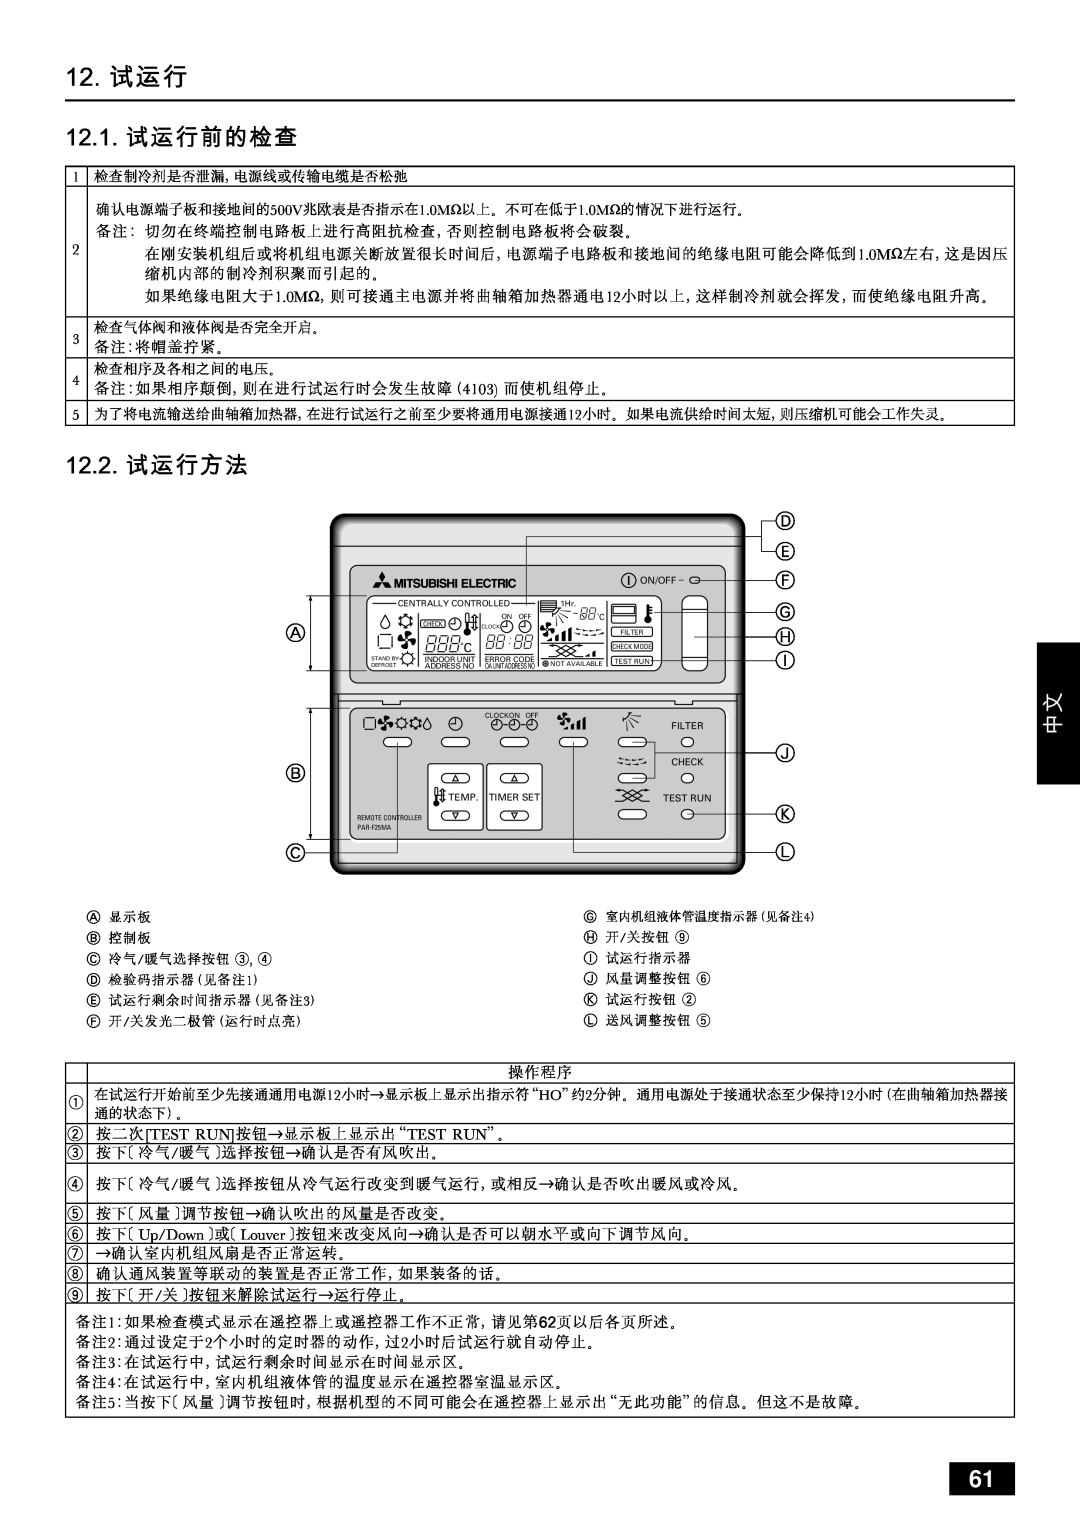 Mitsubishi Electronics PUHY-YMC installation manual Nok=, Noknk=, Nokok= 